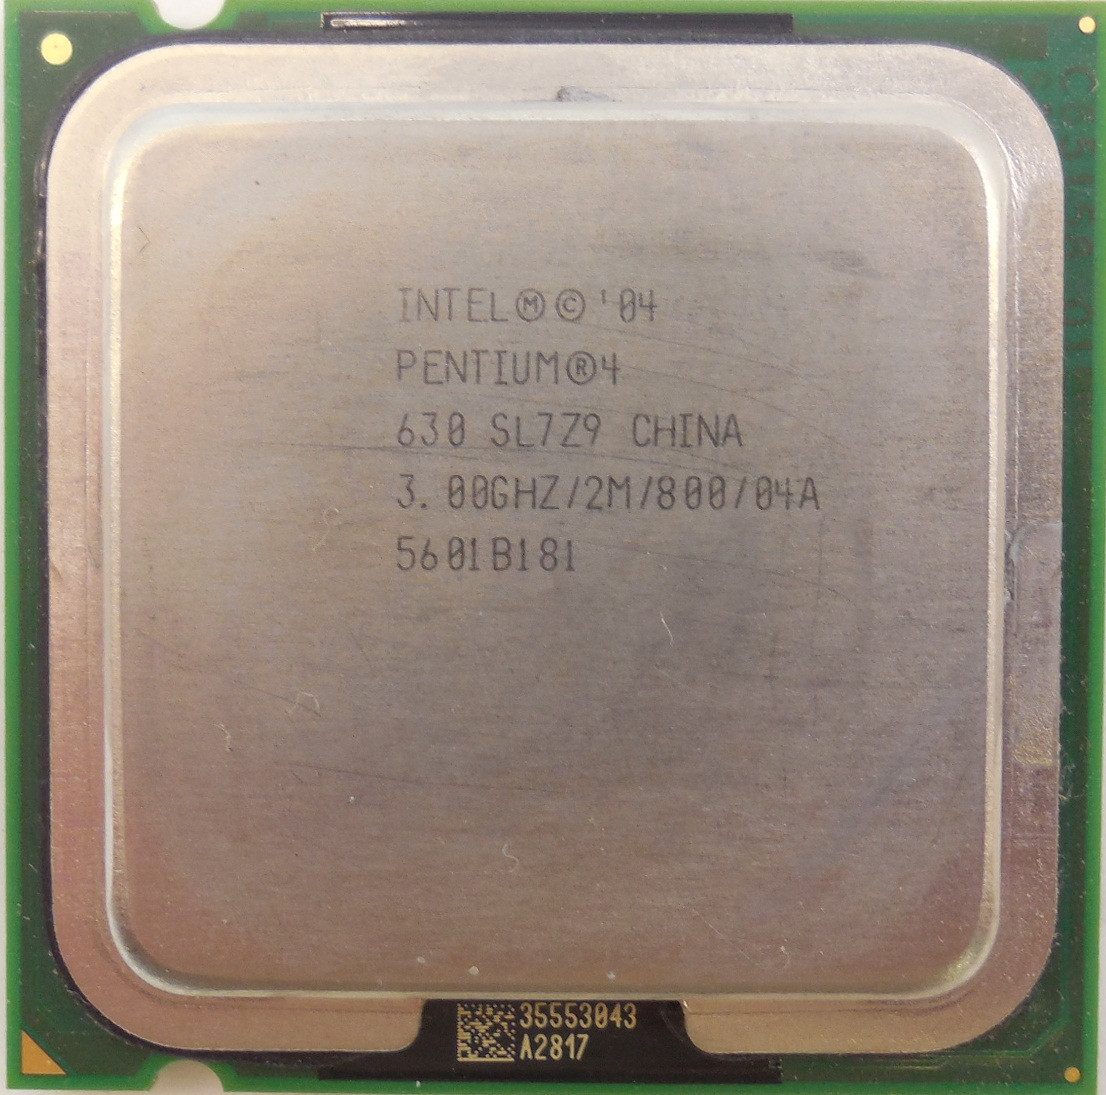 Intel pentium 4 3.00 ghz. Процессор Intel Pentium 4. Процессор Интел пентиум 4. Процессор Intel Pentium 4 2,0 ГГЦ. Интел процессор 630 sl729.